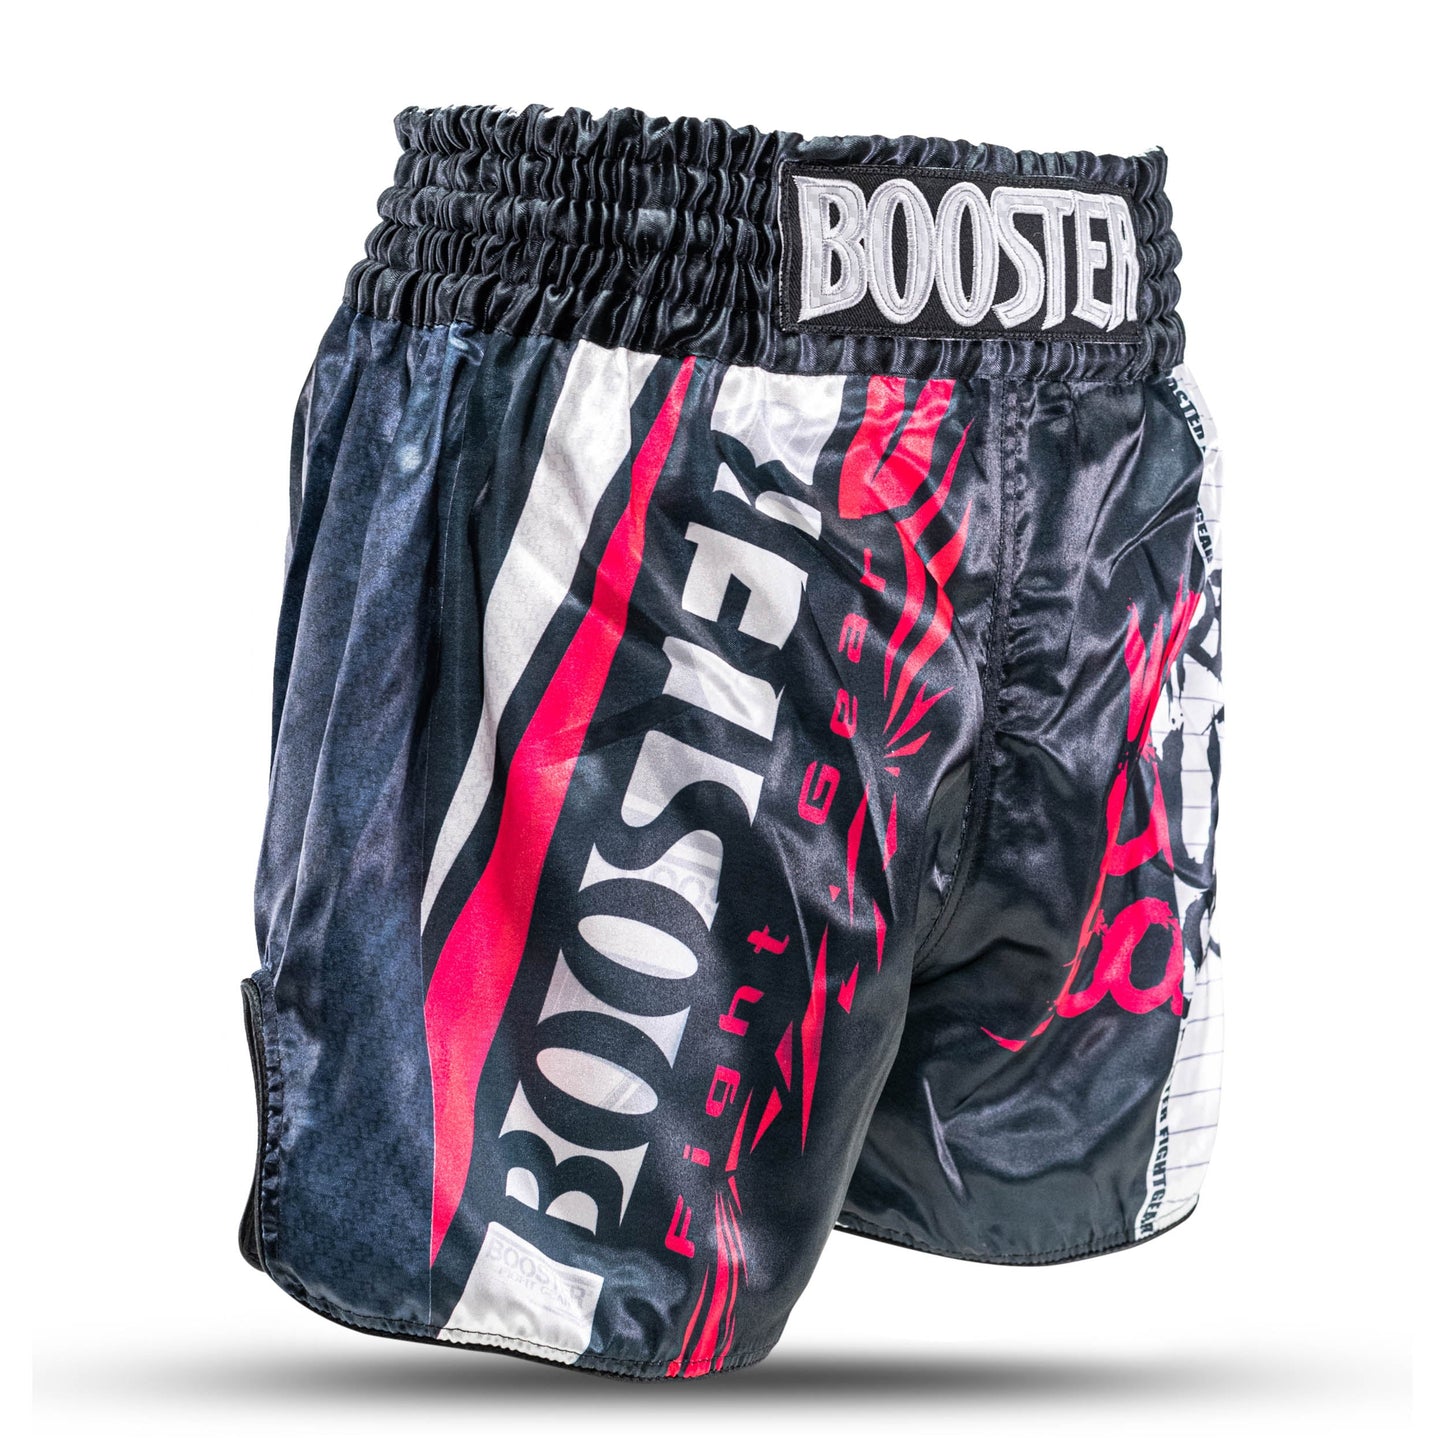 Booster Boxing Shorts WAYB Pink